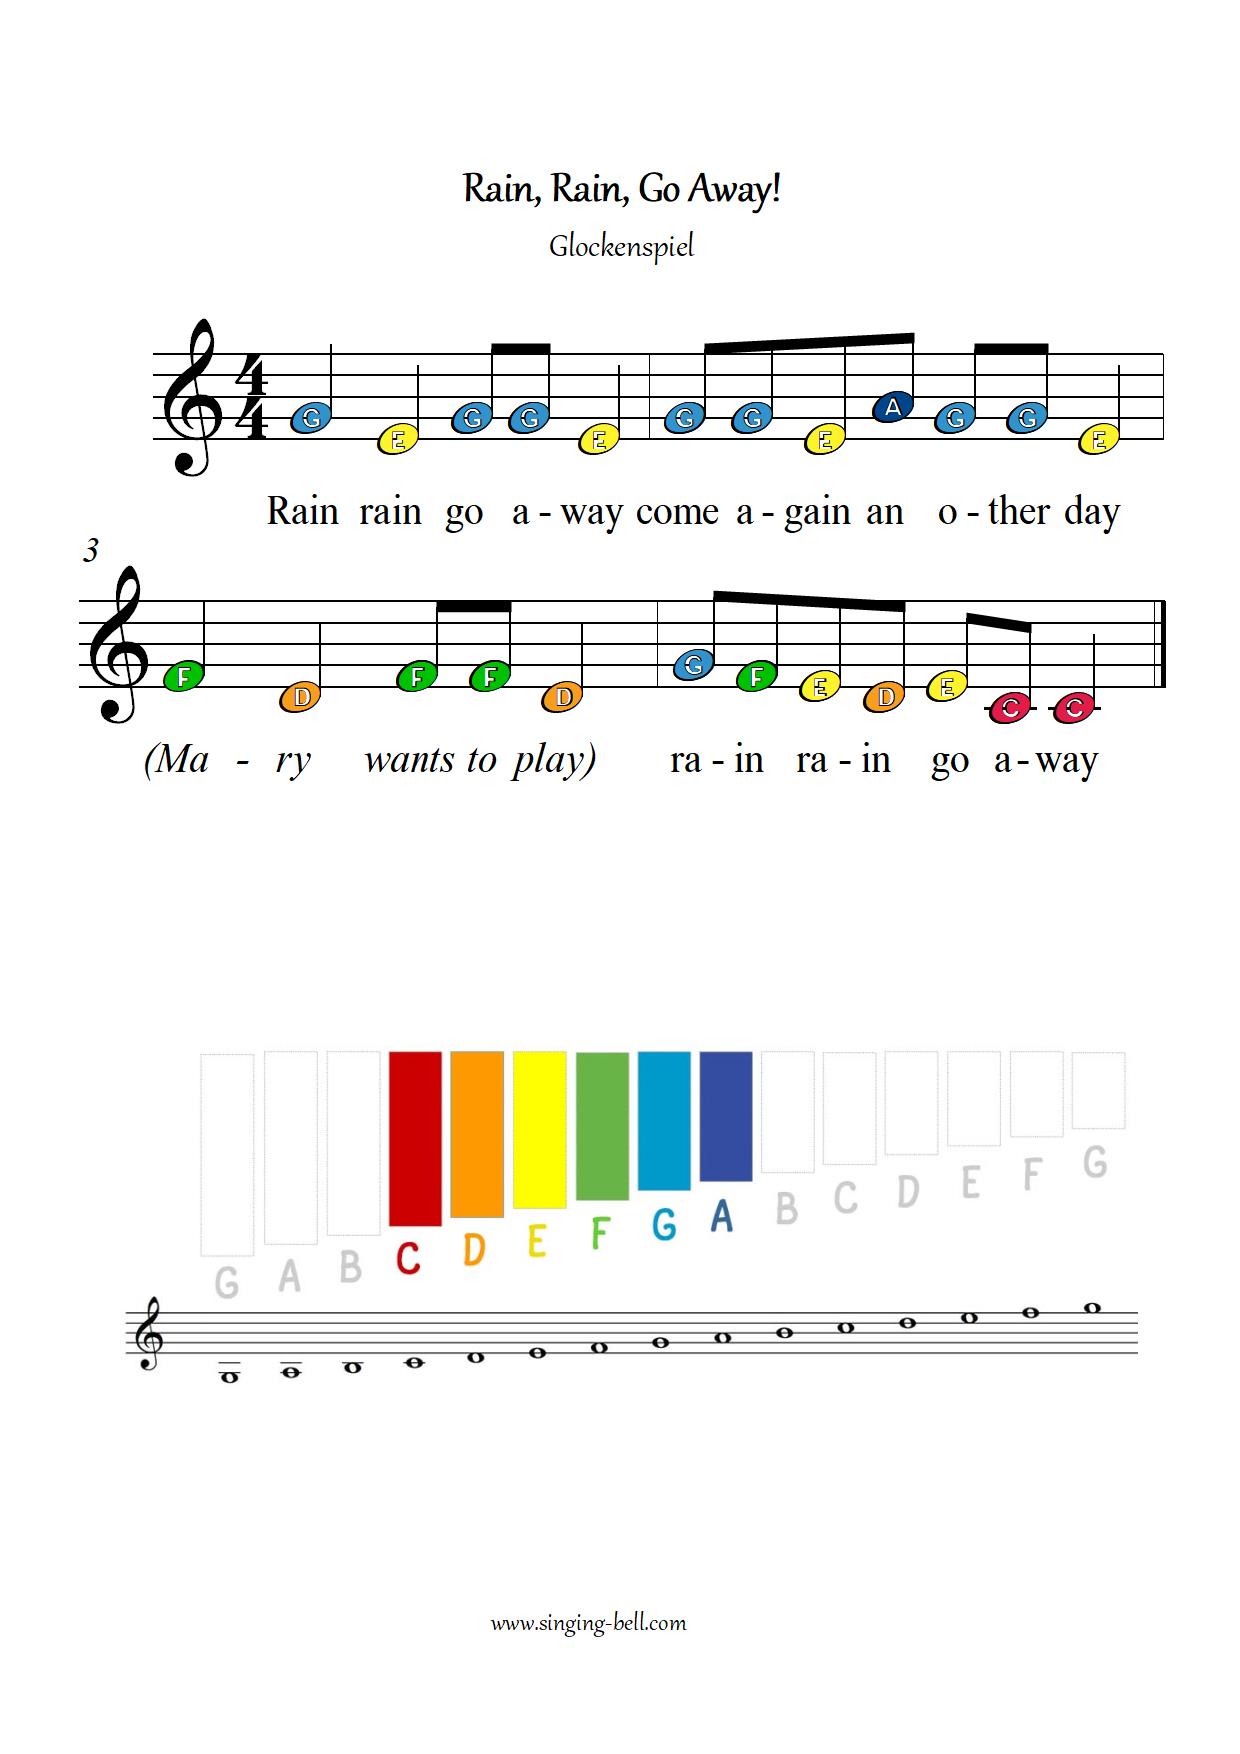 Rain-Rain Go Away free xylophone glockenspiel sheet music color letter notes chart pdf